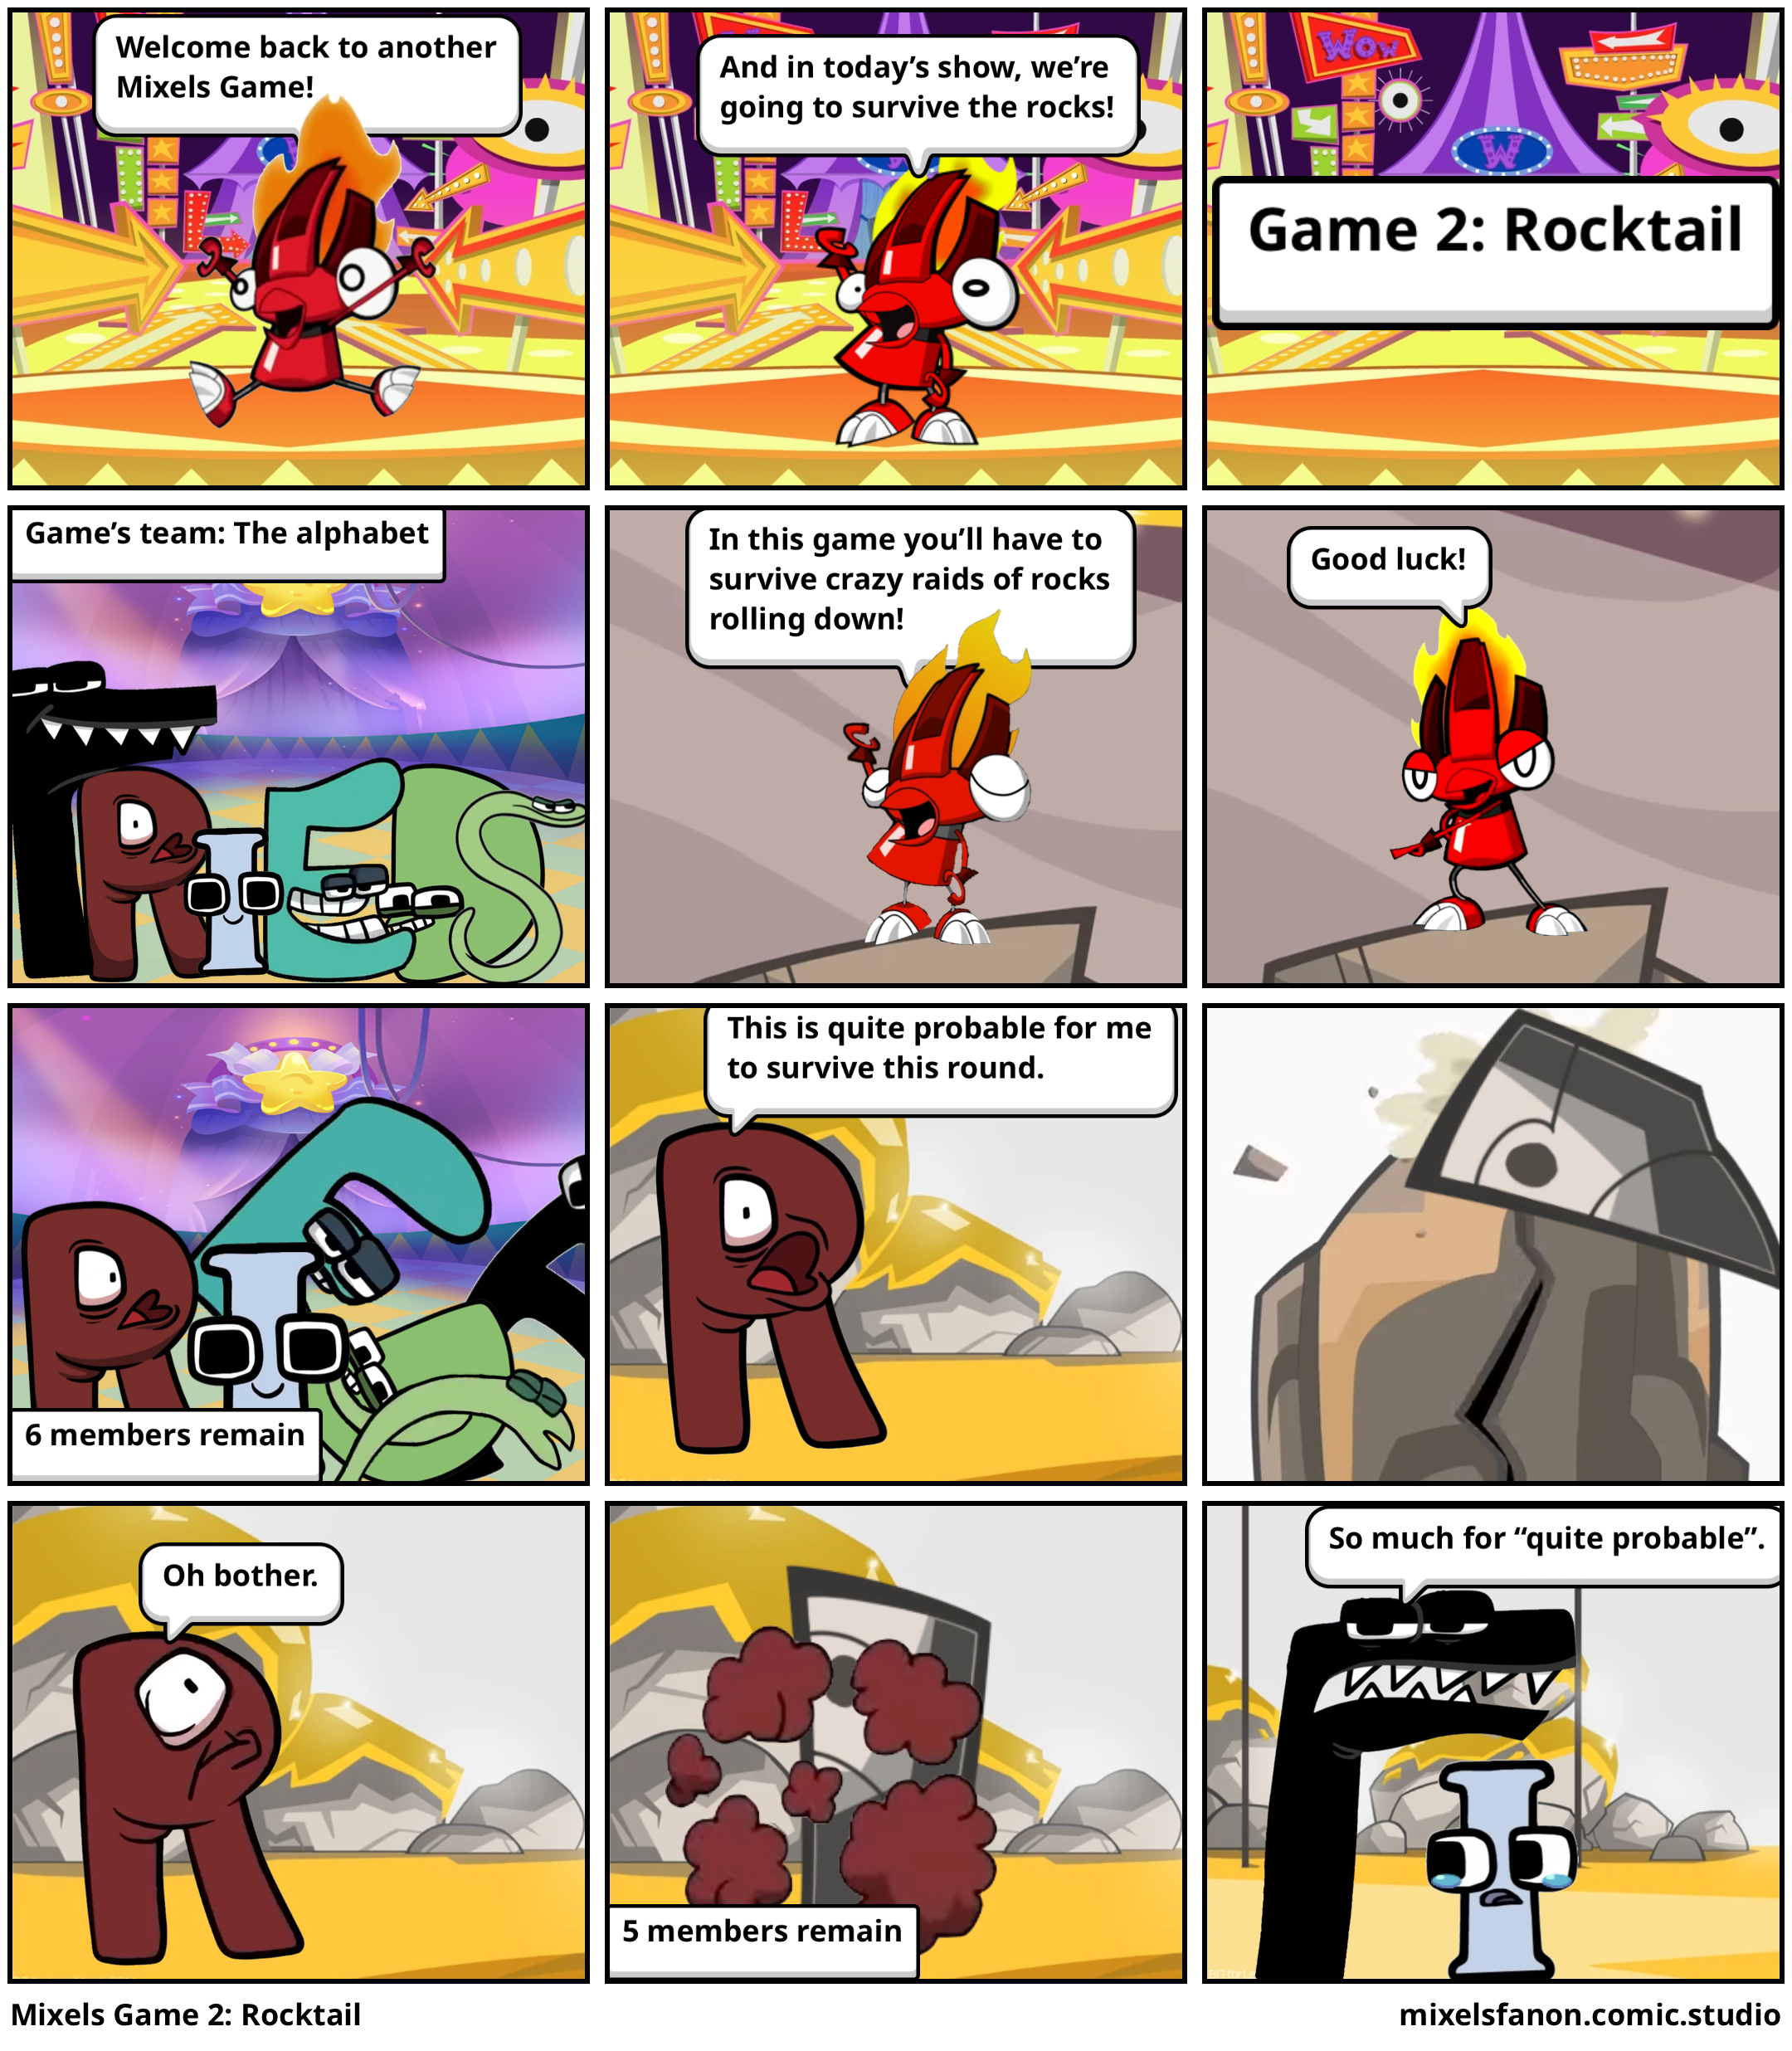 Mixels Game 2: Rocktail